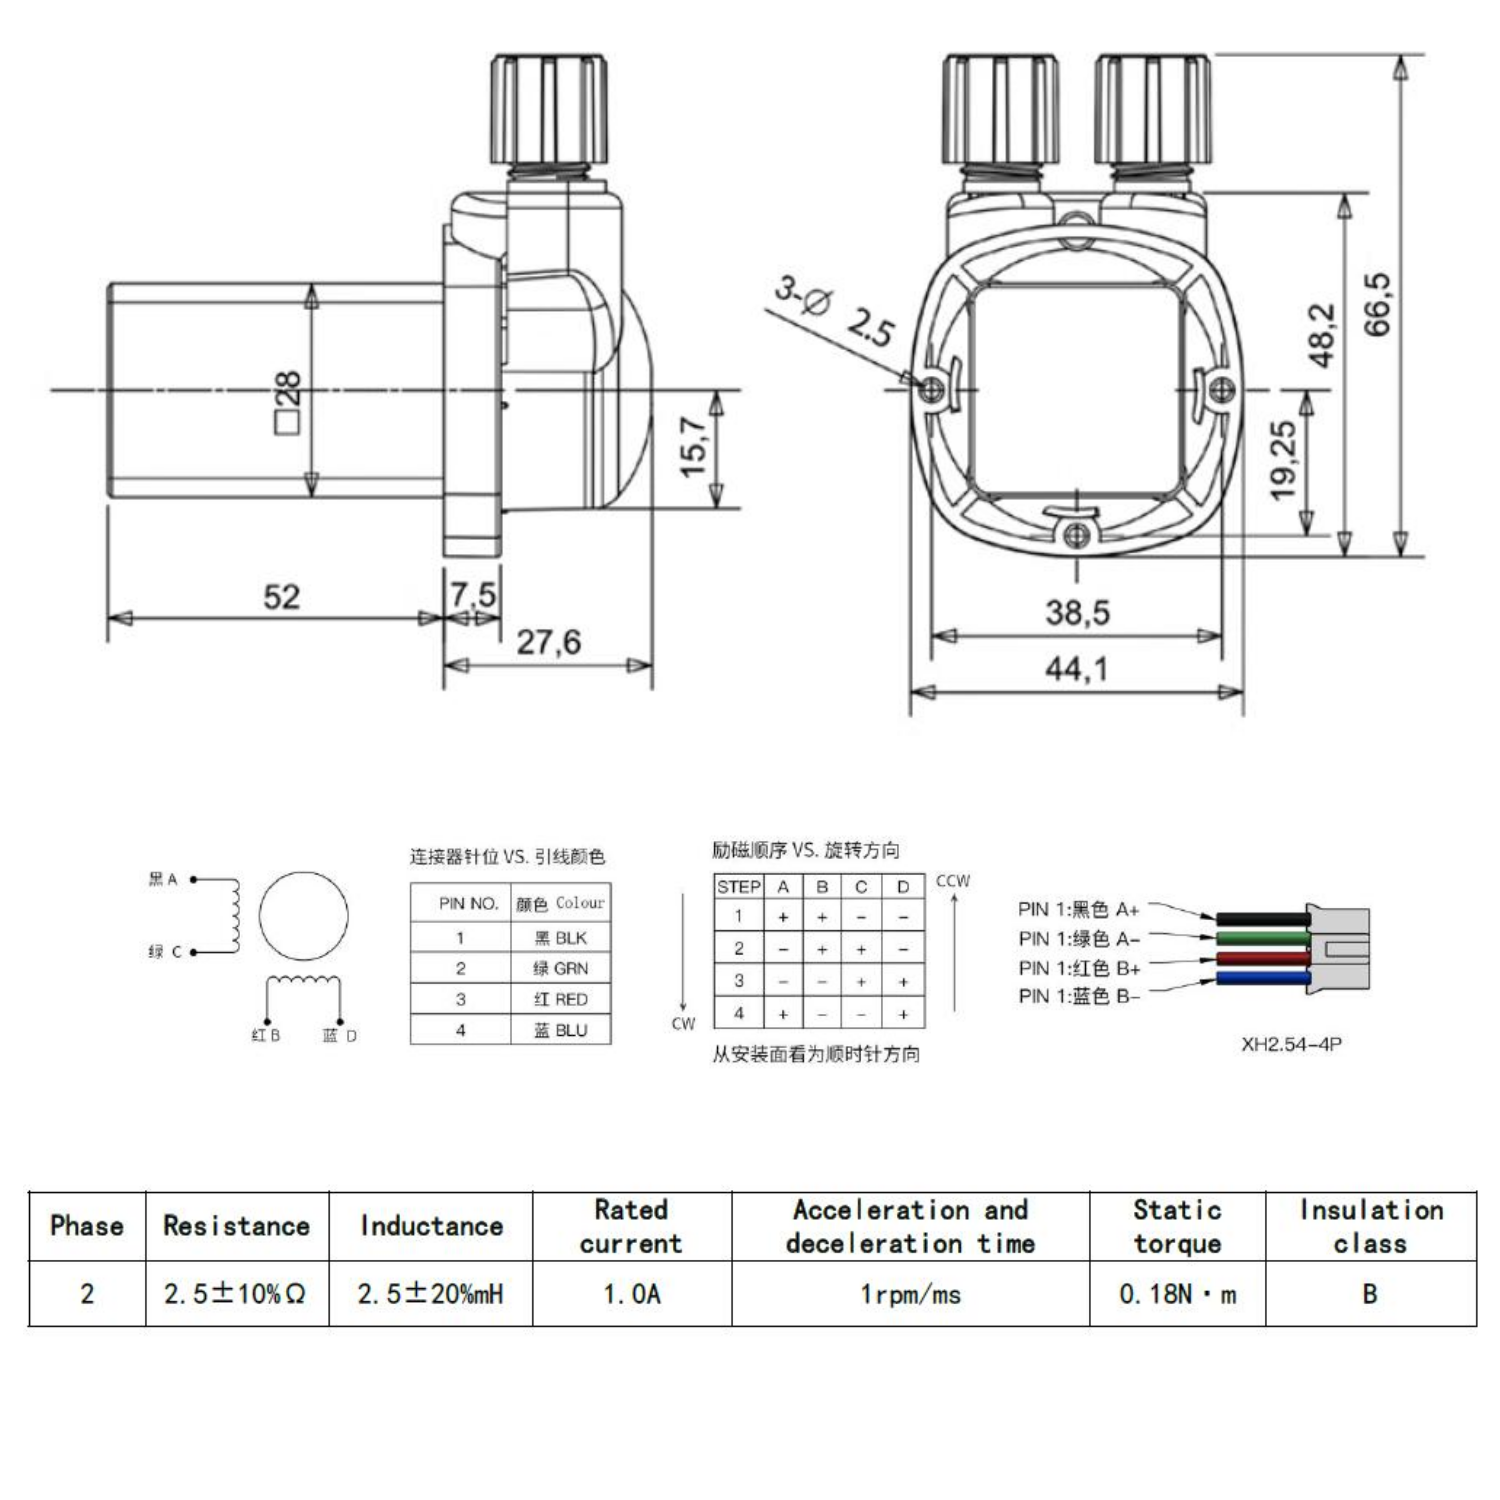 Kamoer KCM Peristaltikpumpe, Dosierpumpe - 12V - 24V, 0-160ml/min